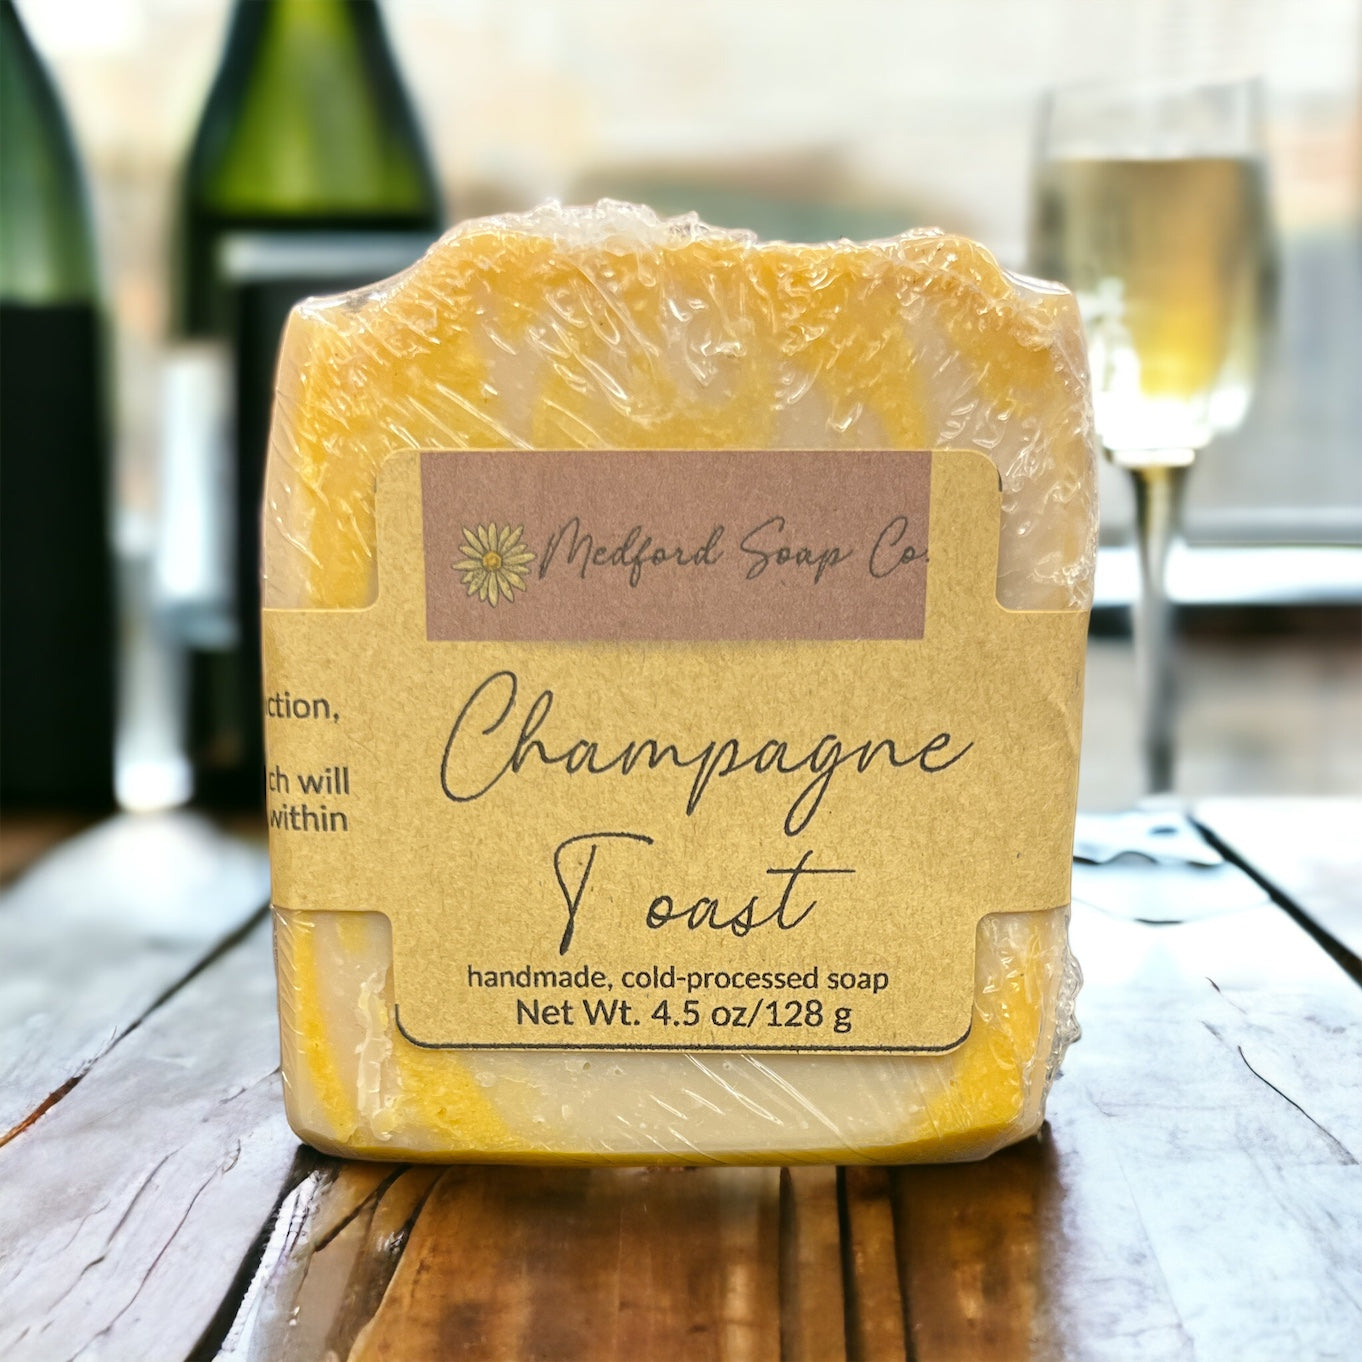 Champagne Toast – Medford Soap Co.